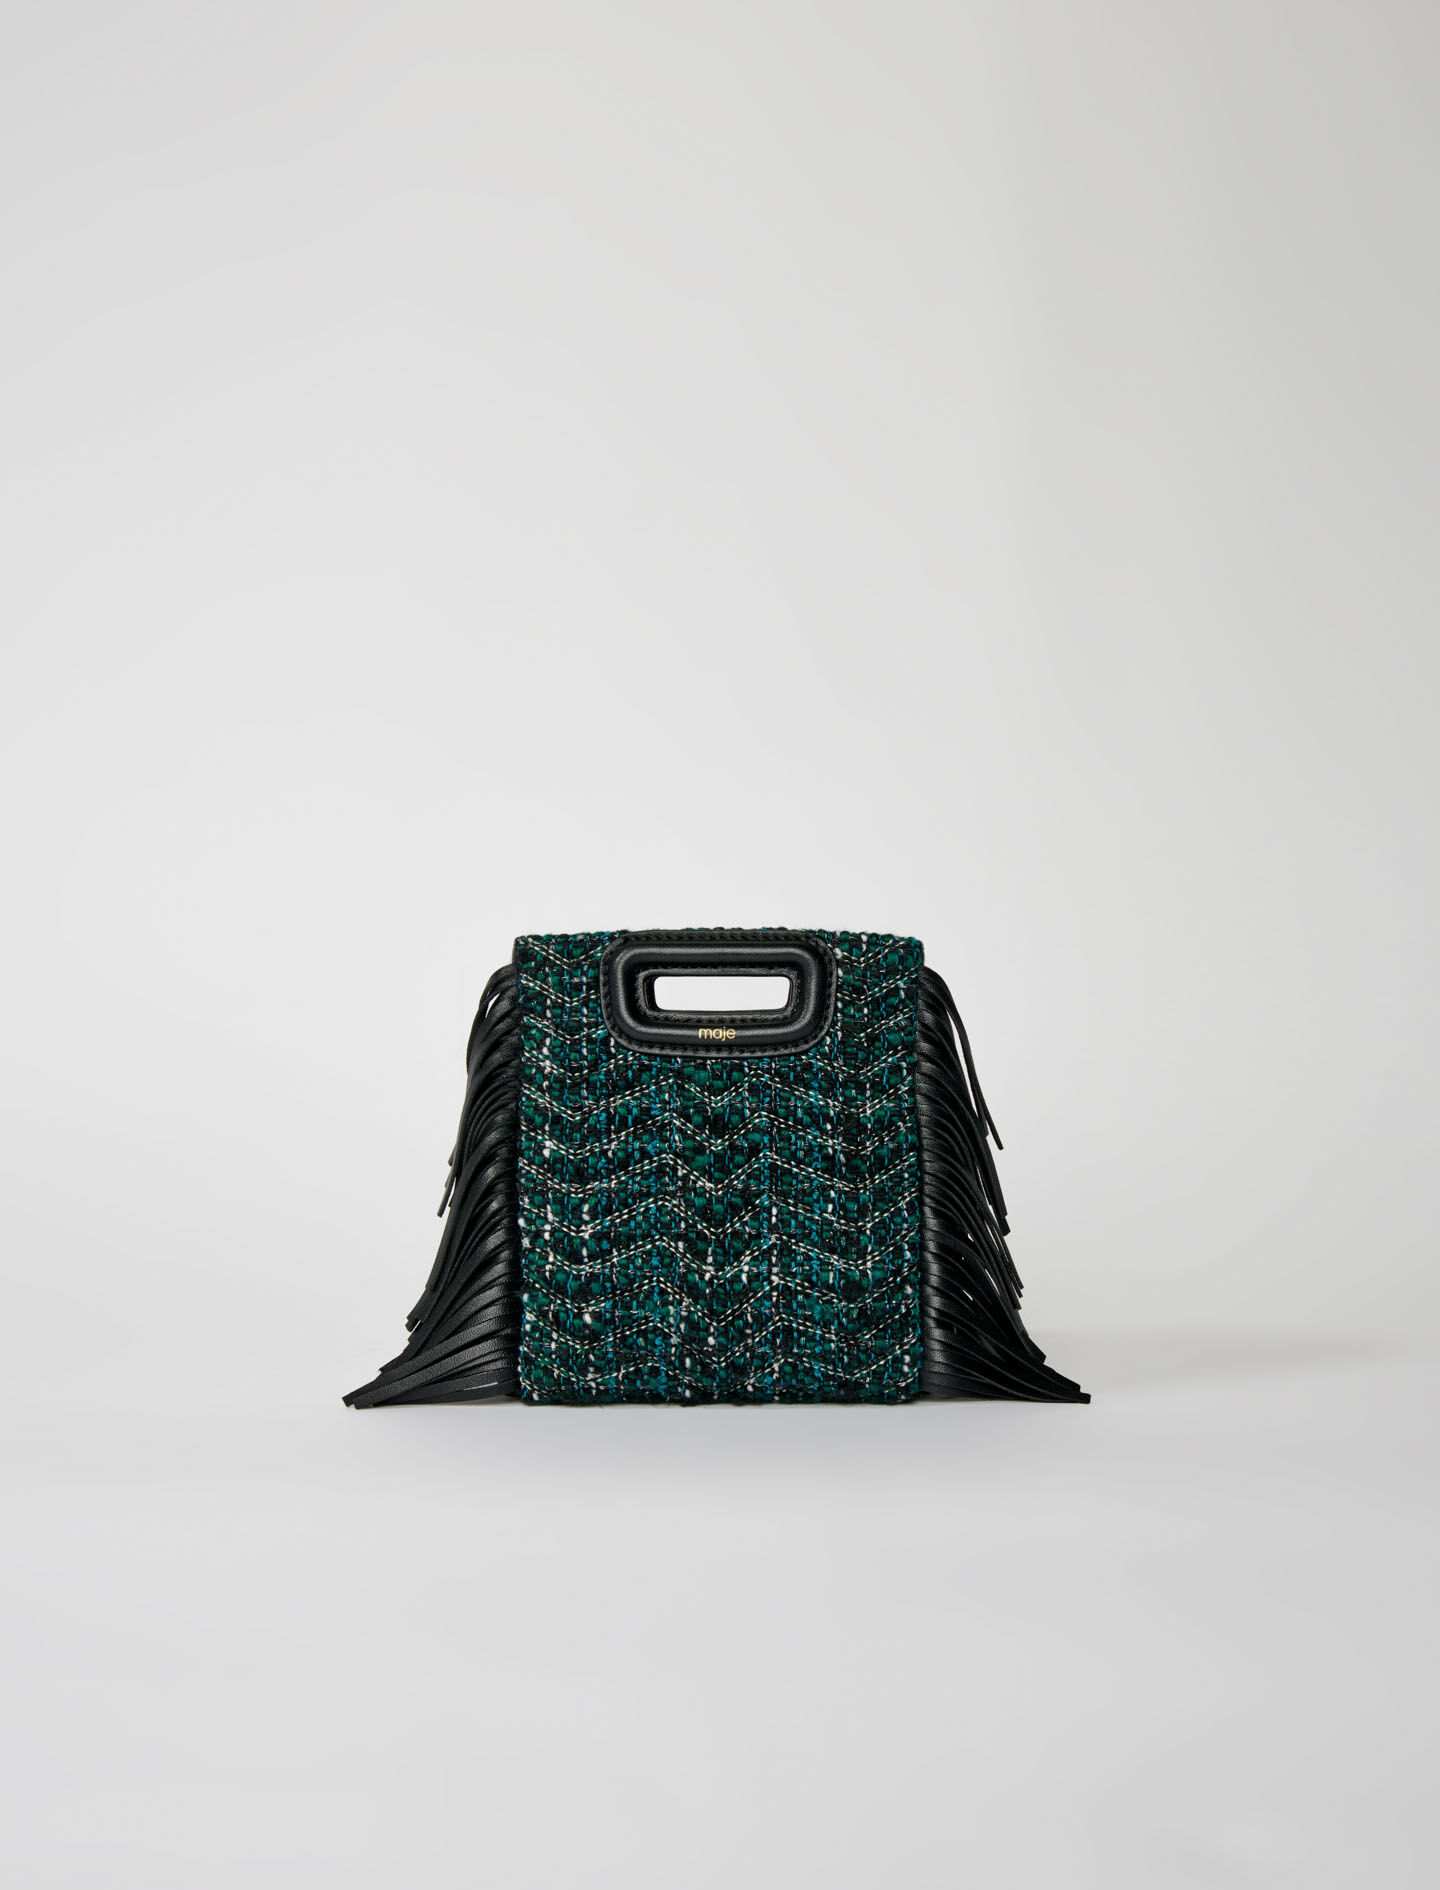 Modern Handbag - Real Leather - Brown - Black - Dark Green - ApolloBox